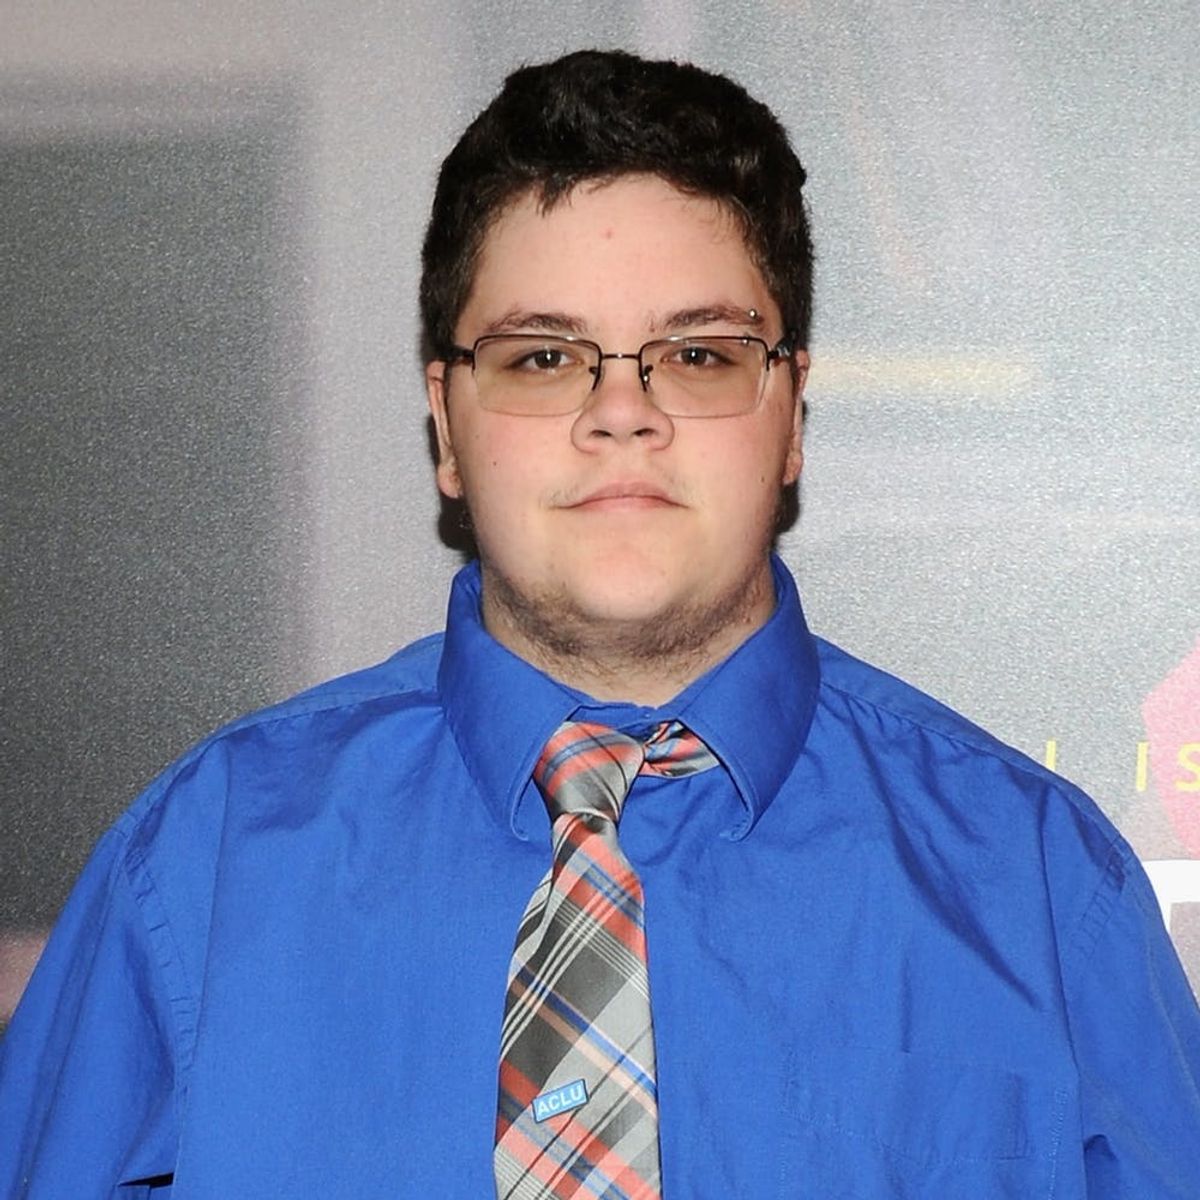 Transgender Teen Gavin Grimm’s Case Will No Longer Be Heard by the Supreme Court